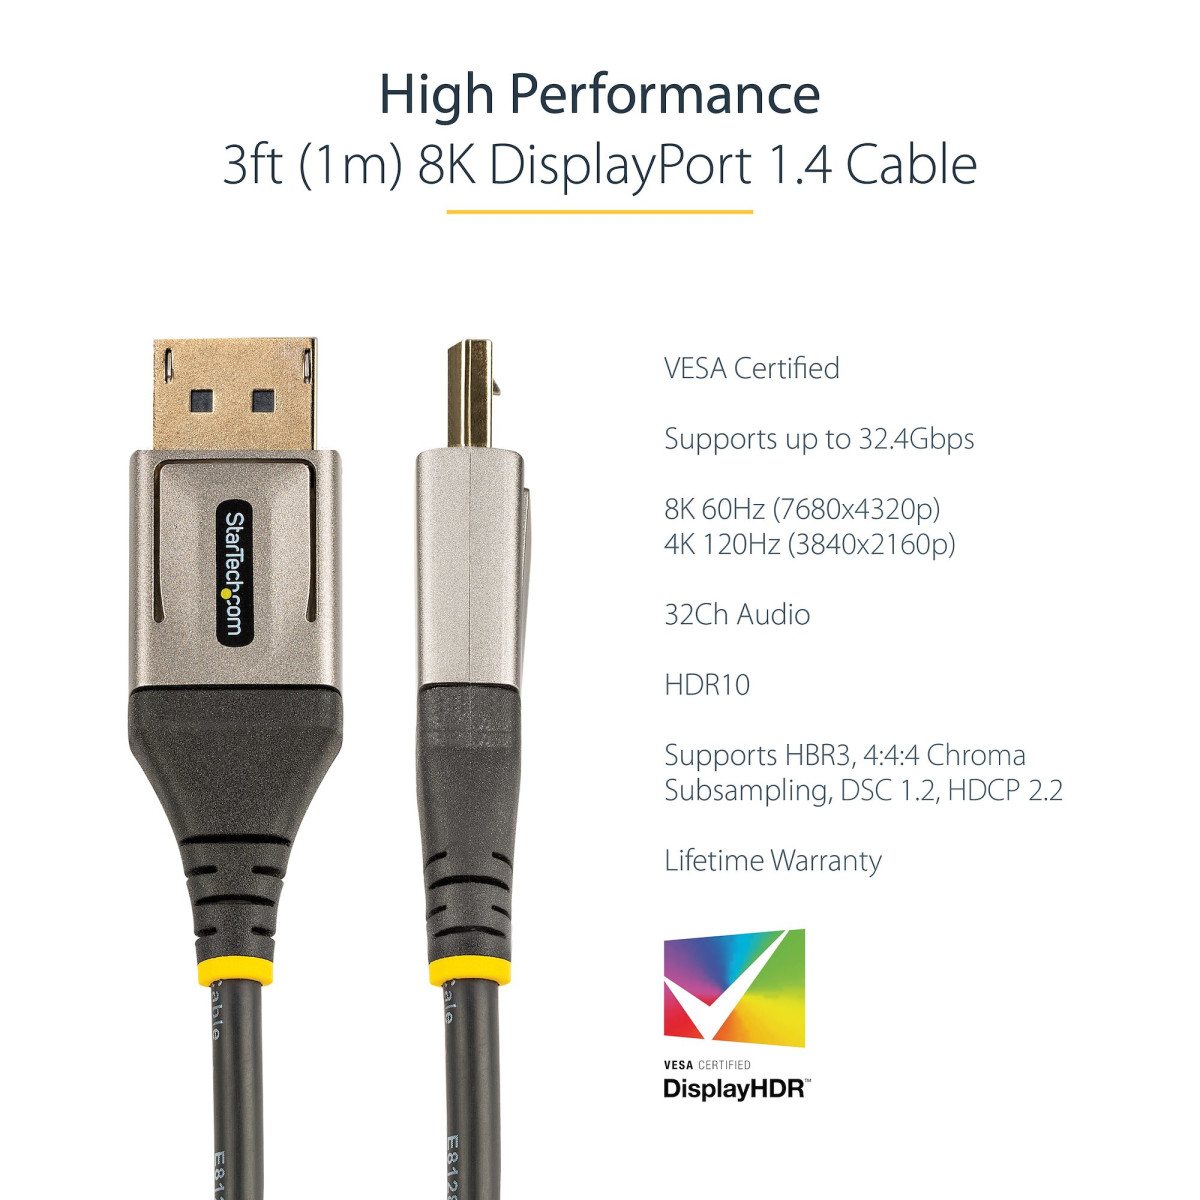 USB C Multiport Adapter - 4K HDMI/PD/USB